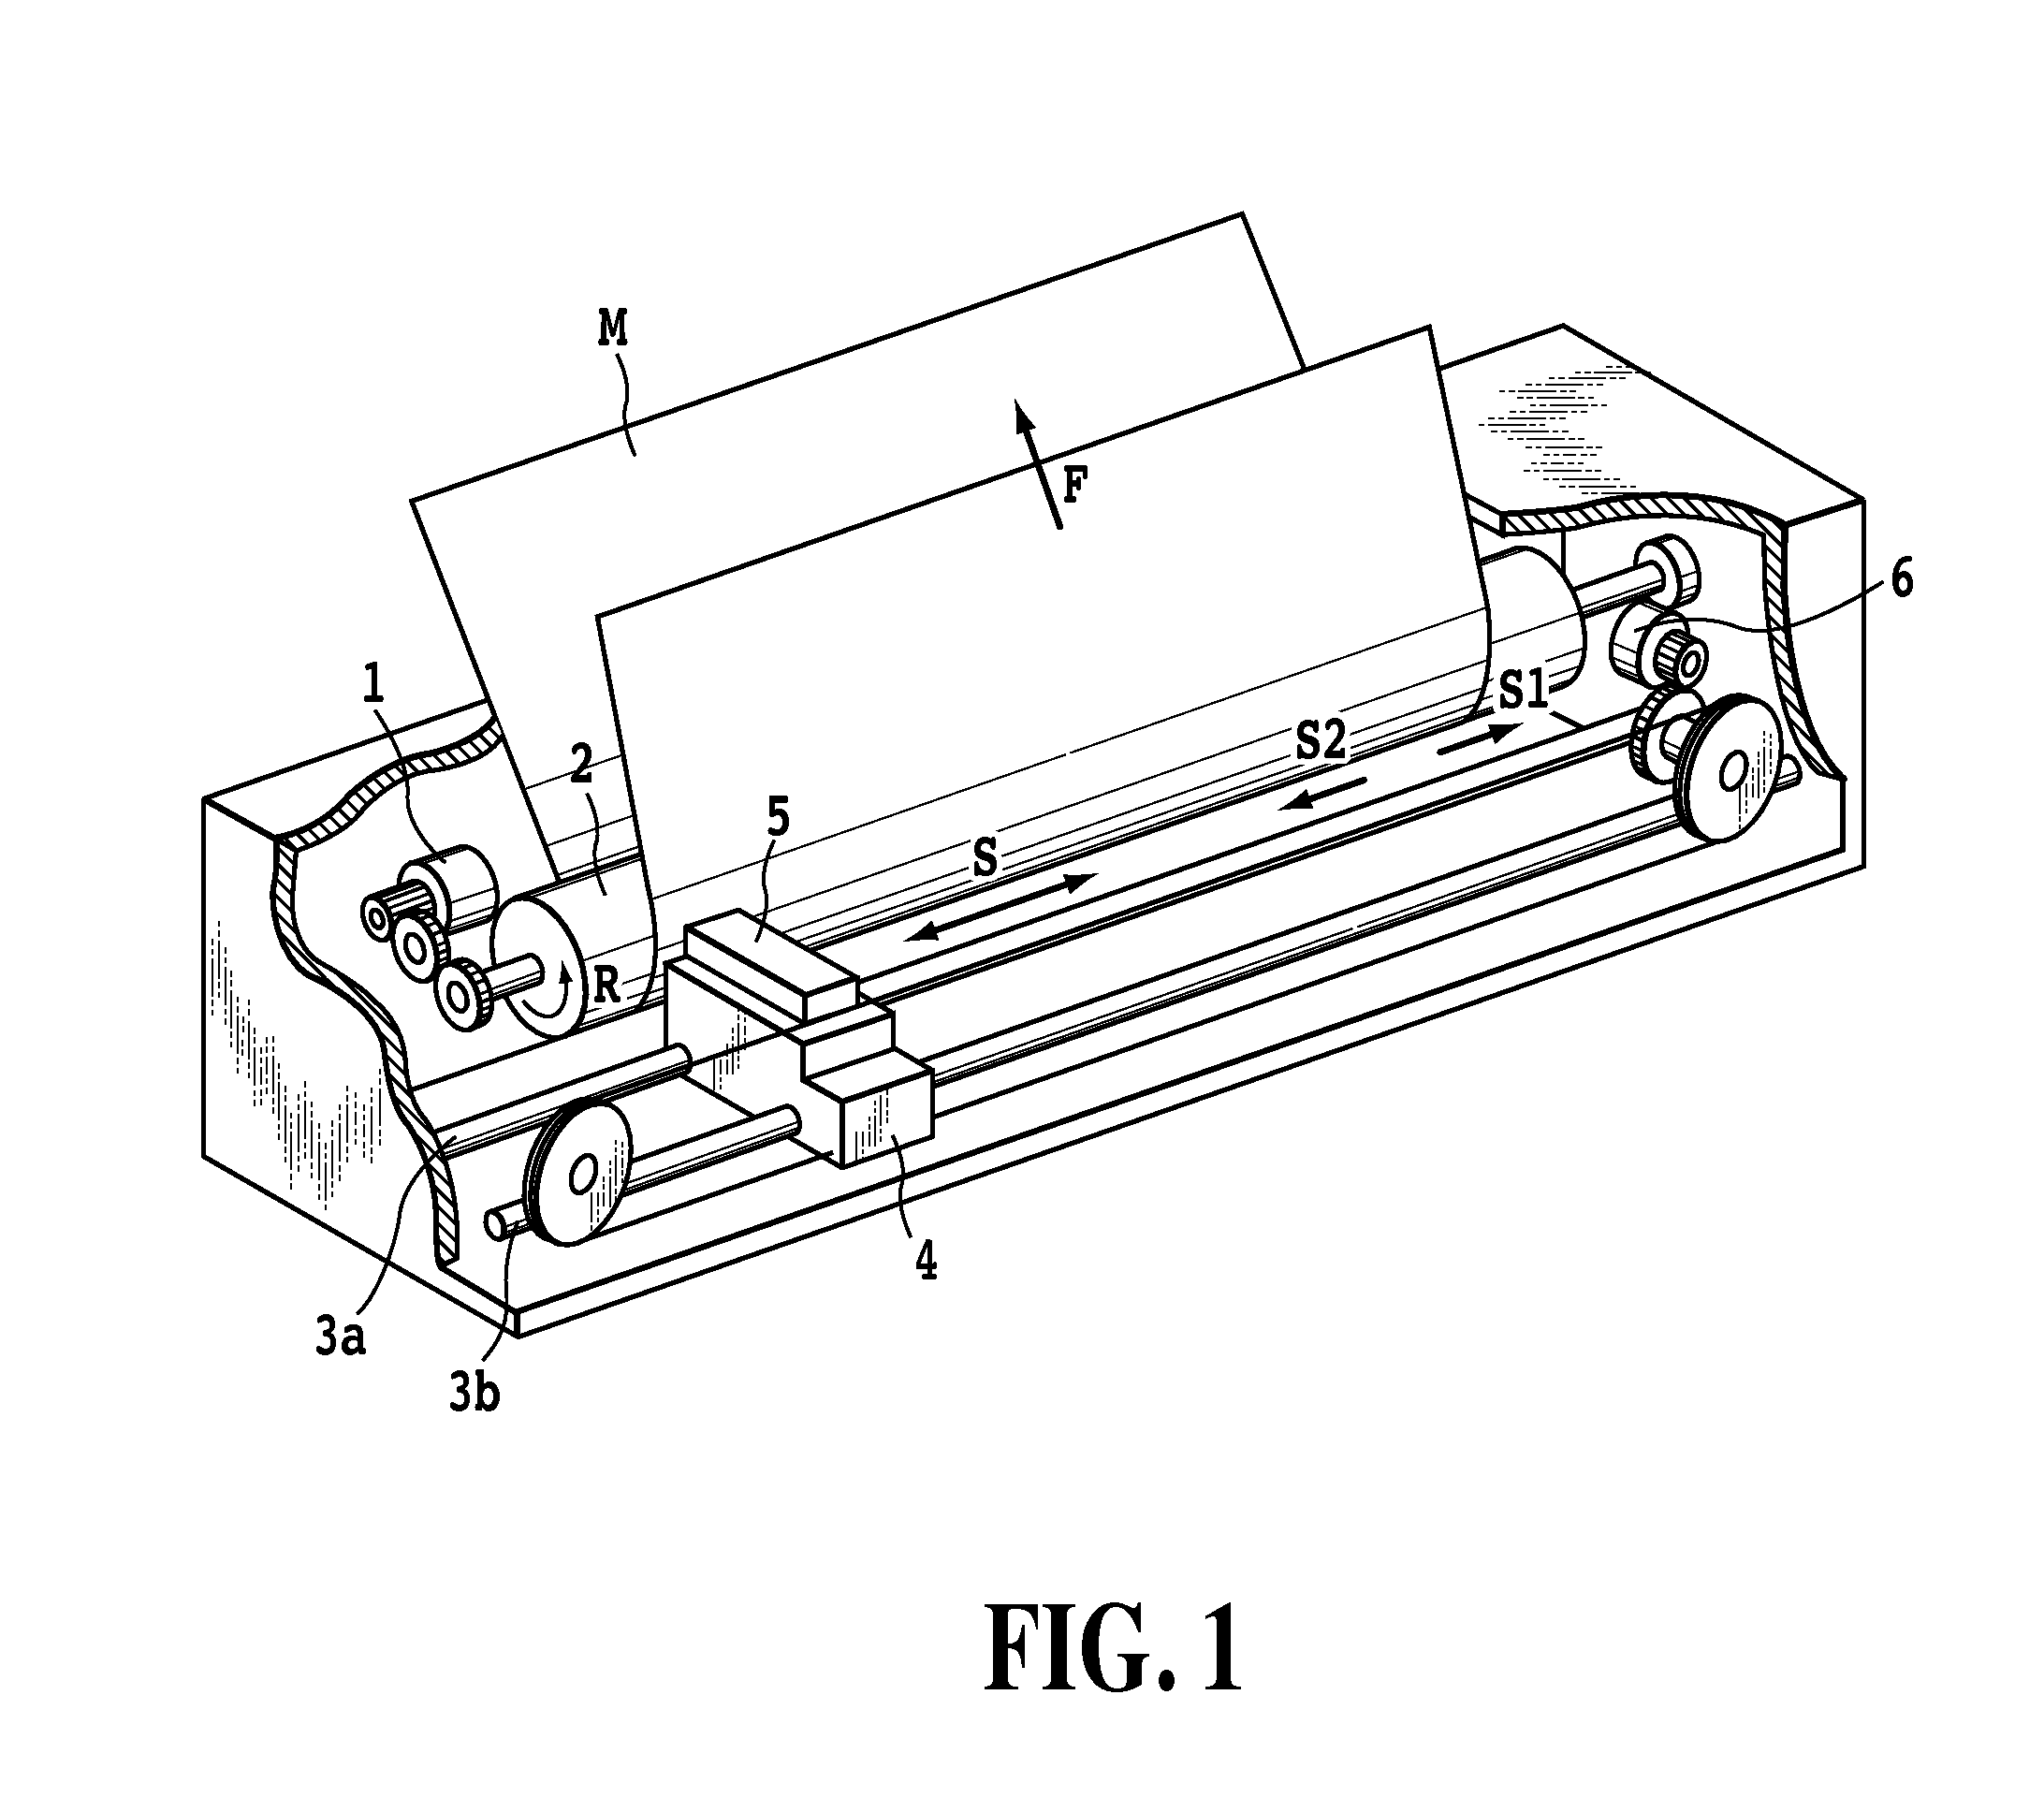 Inkjet print apparatus and inkjet print method